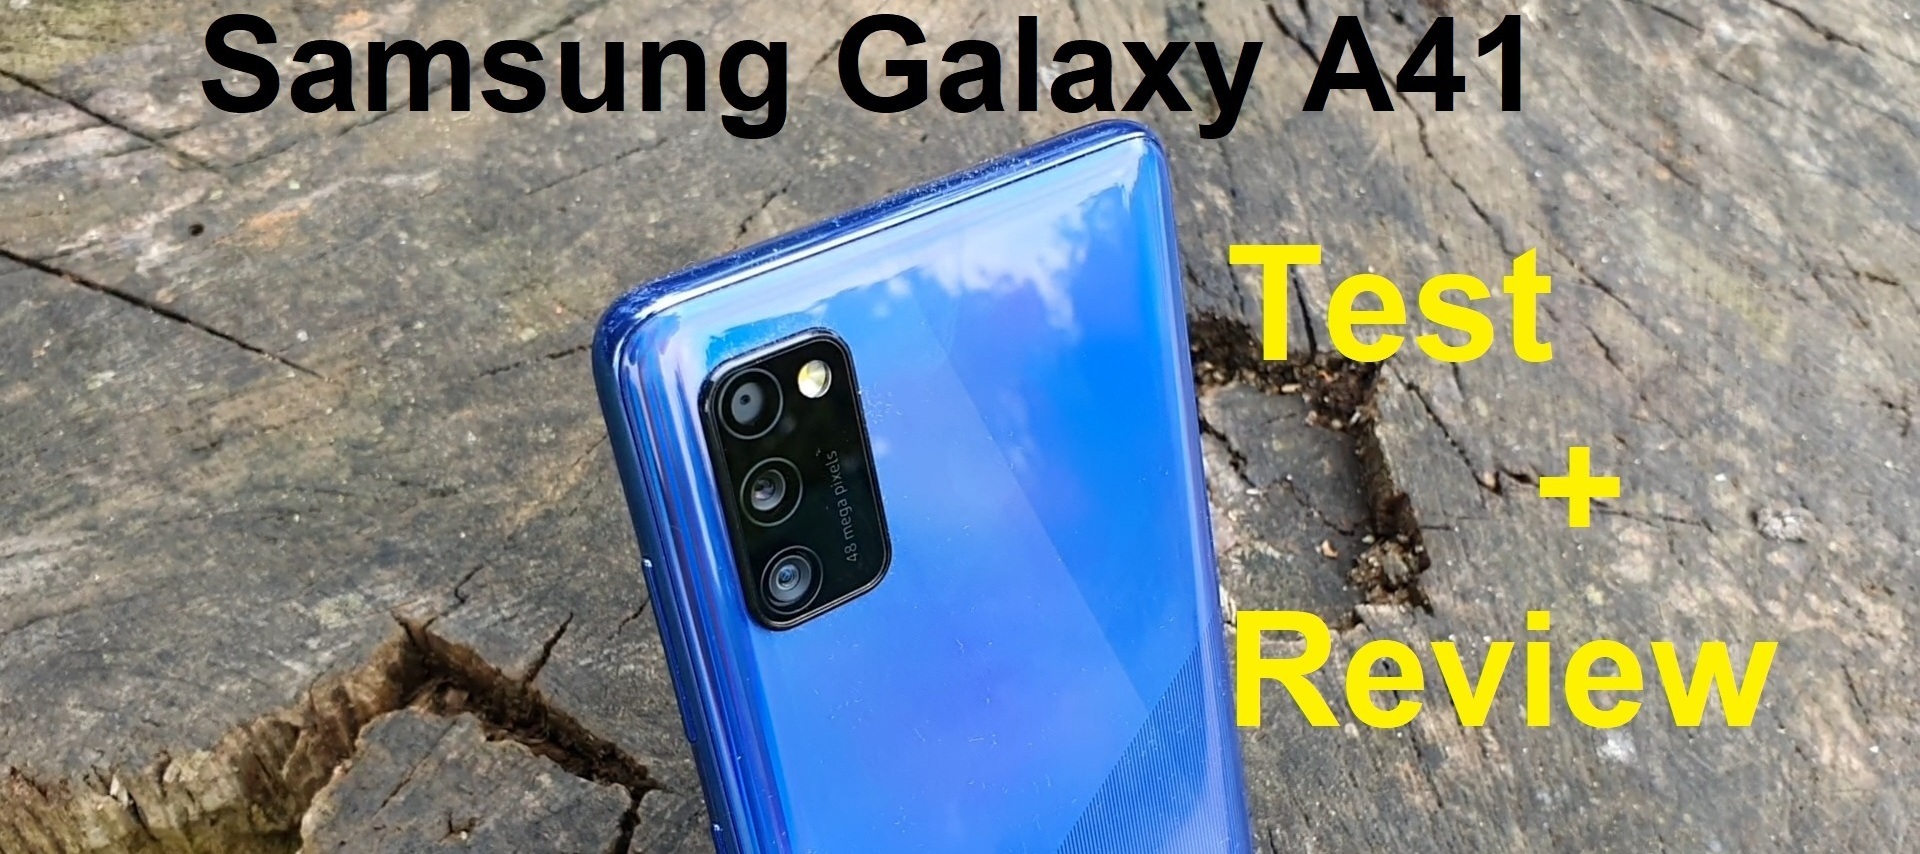 Review + Test Samsung Galaxy A41 - kleine Enttäuschungen inklusive